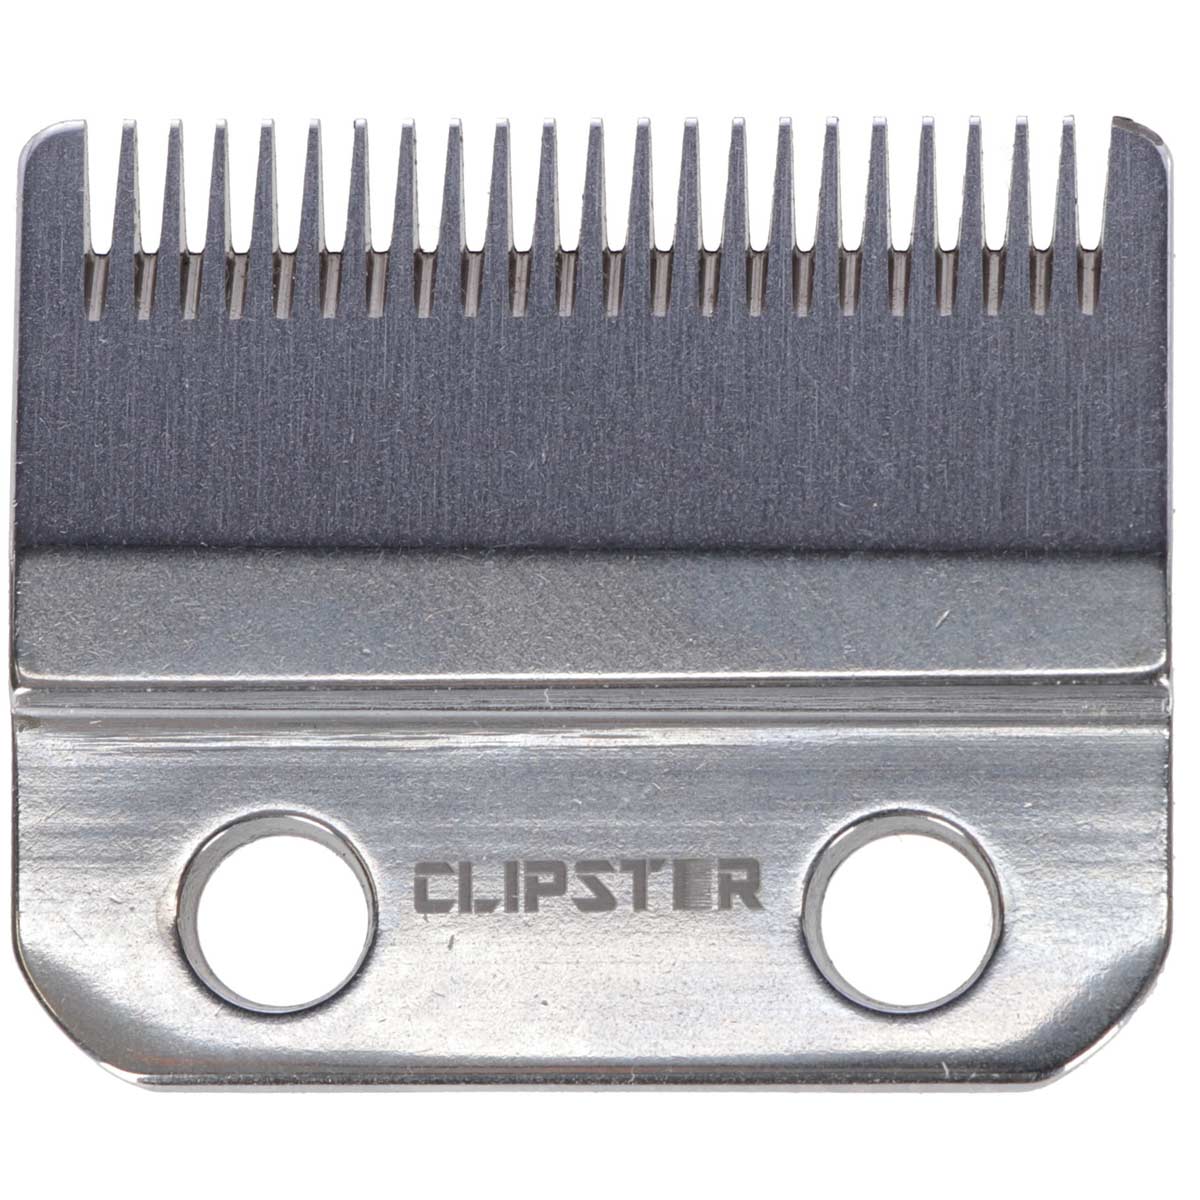 Clipster Testina per tosatrice TaproX